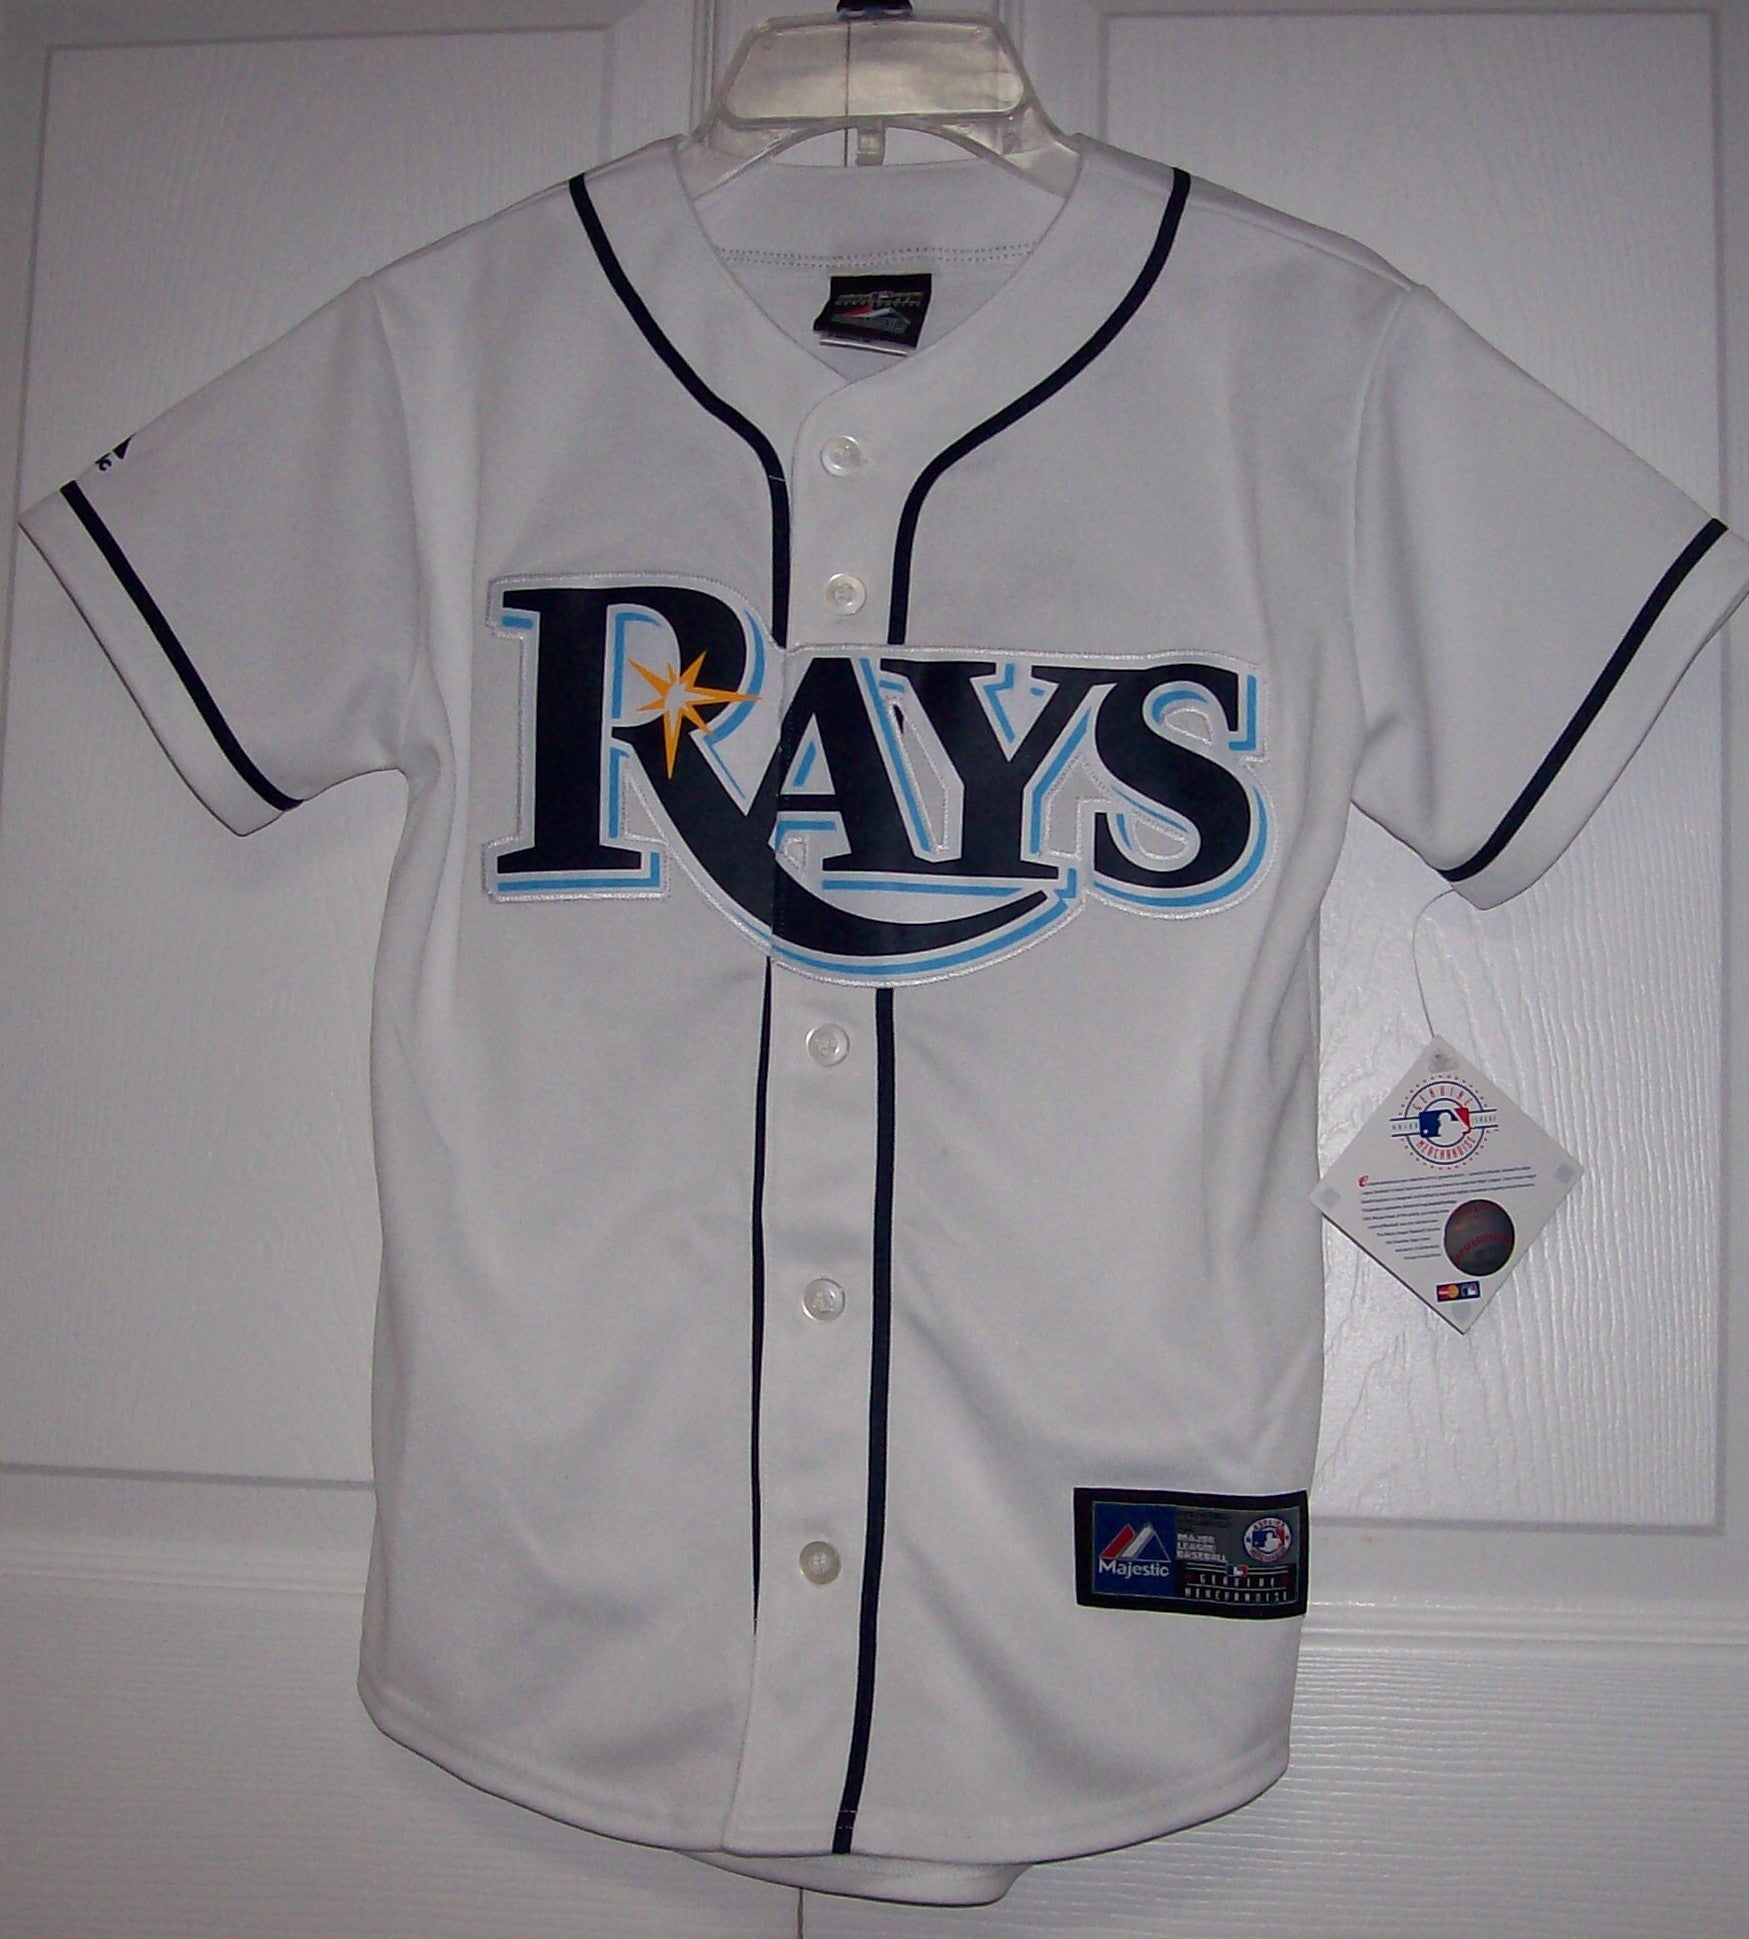 tampa bay rays baseball shirts